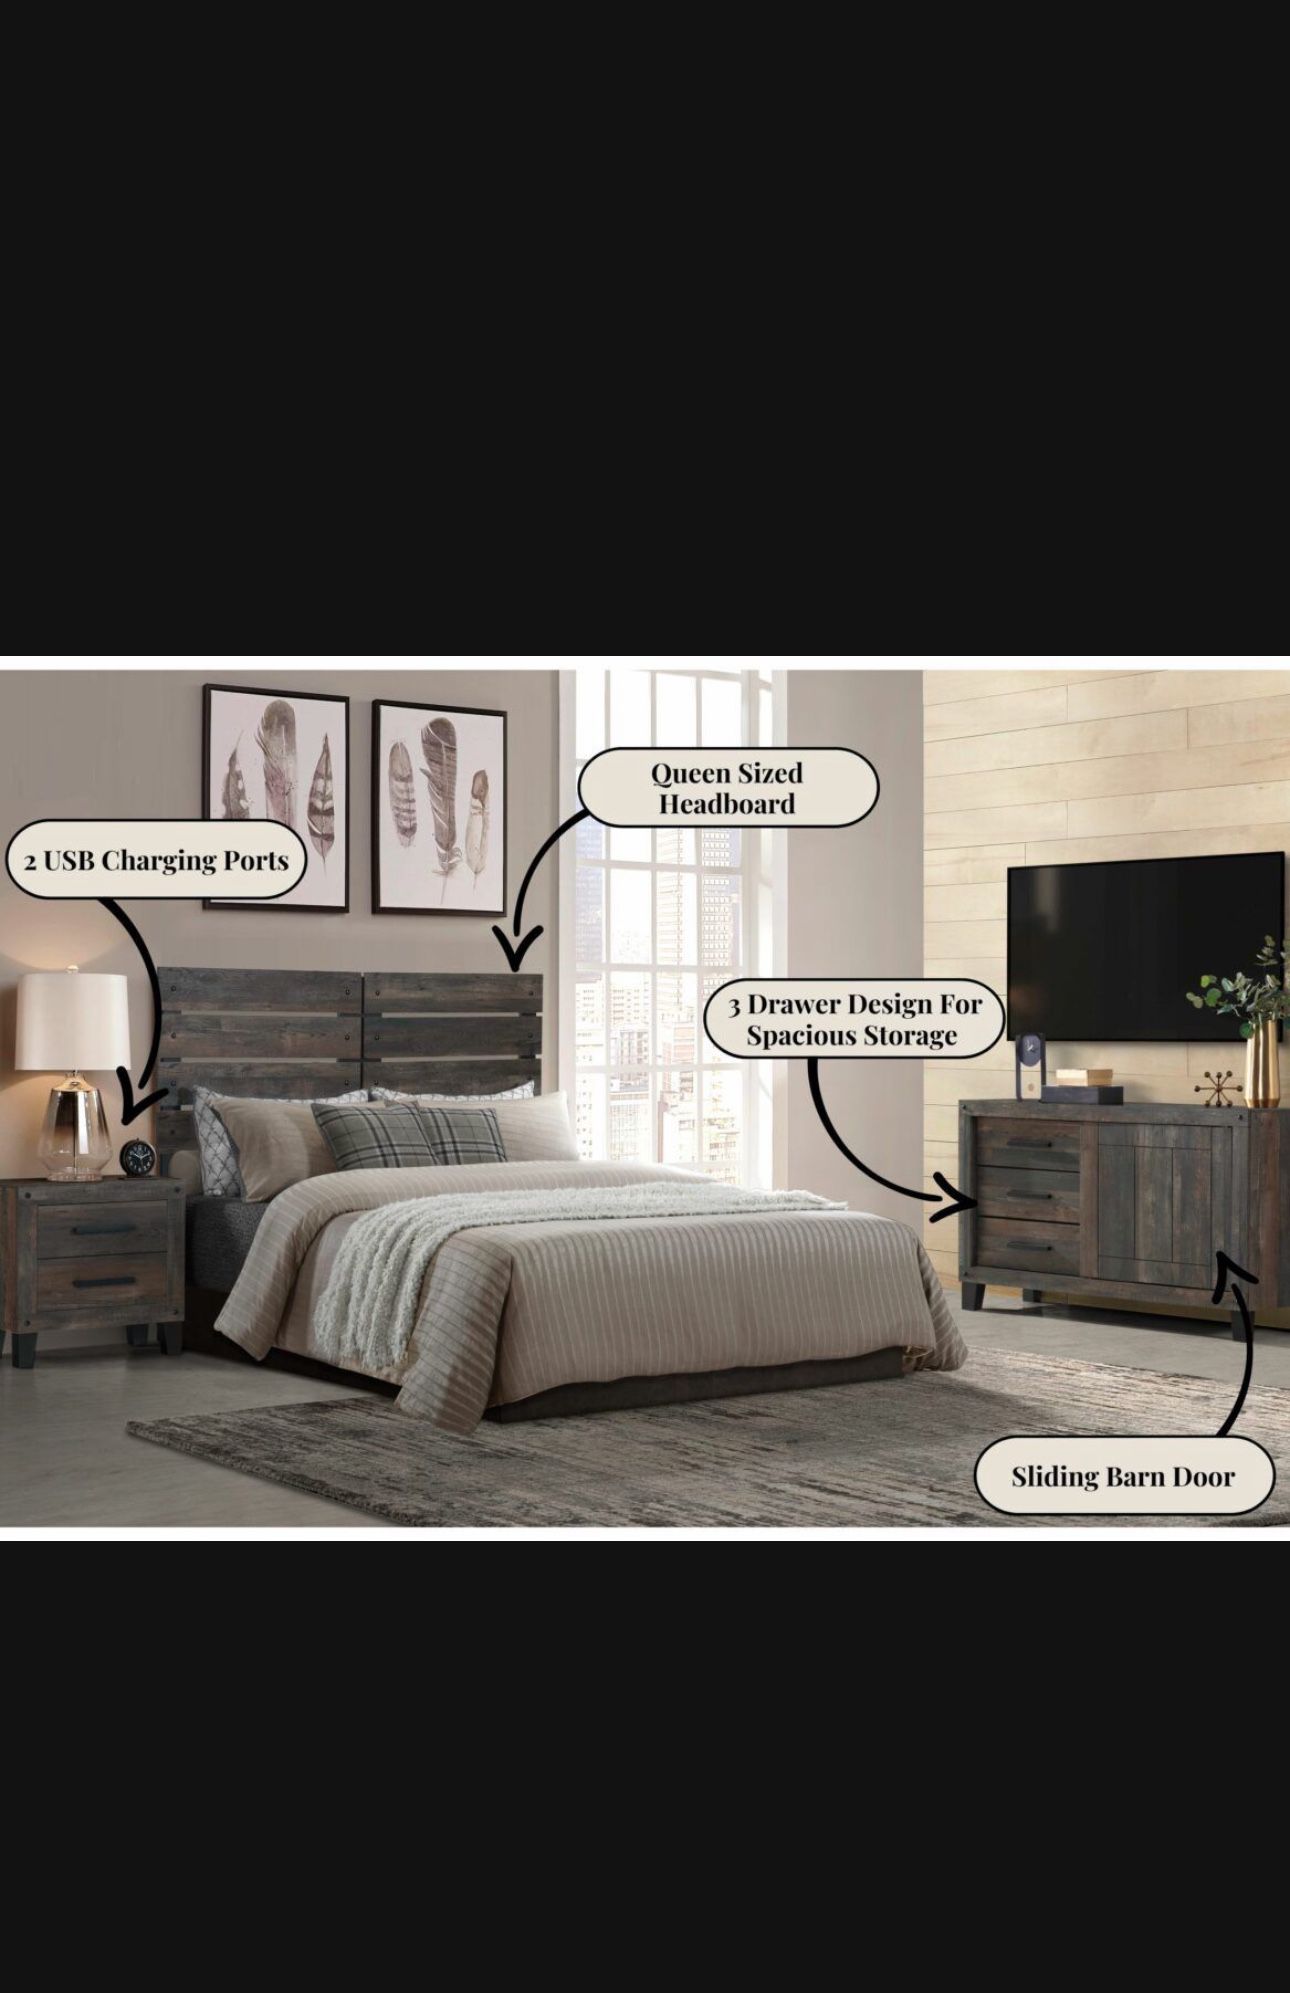 Brand New Complete Bedroom Set For $399